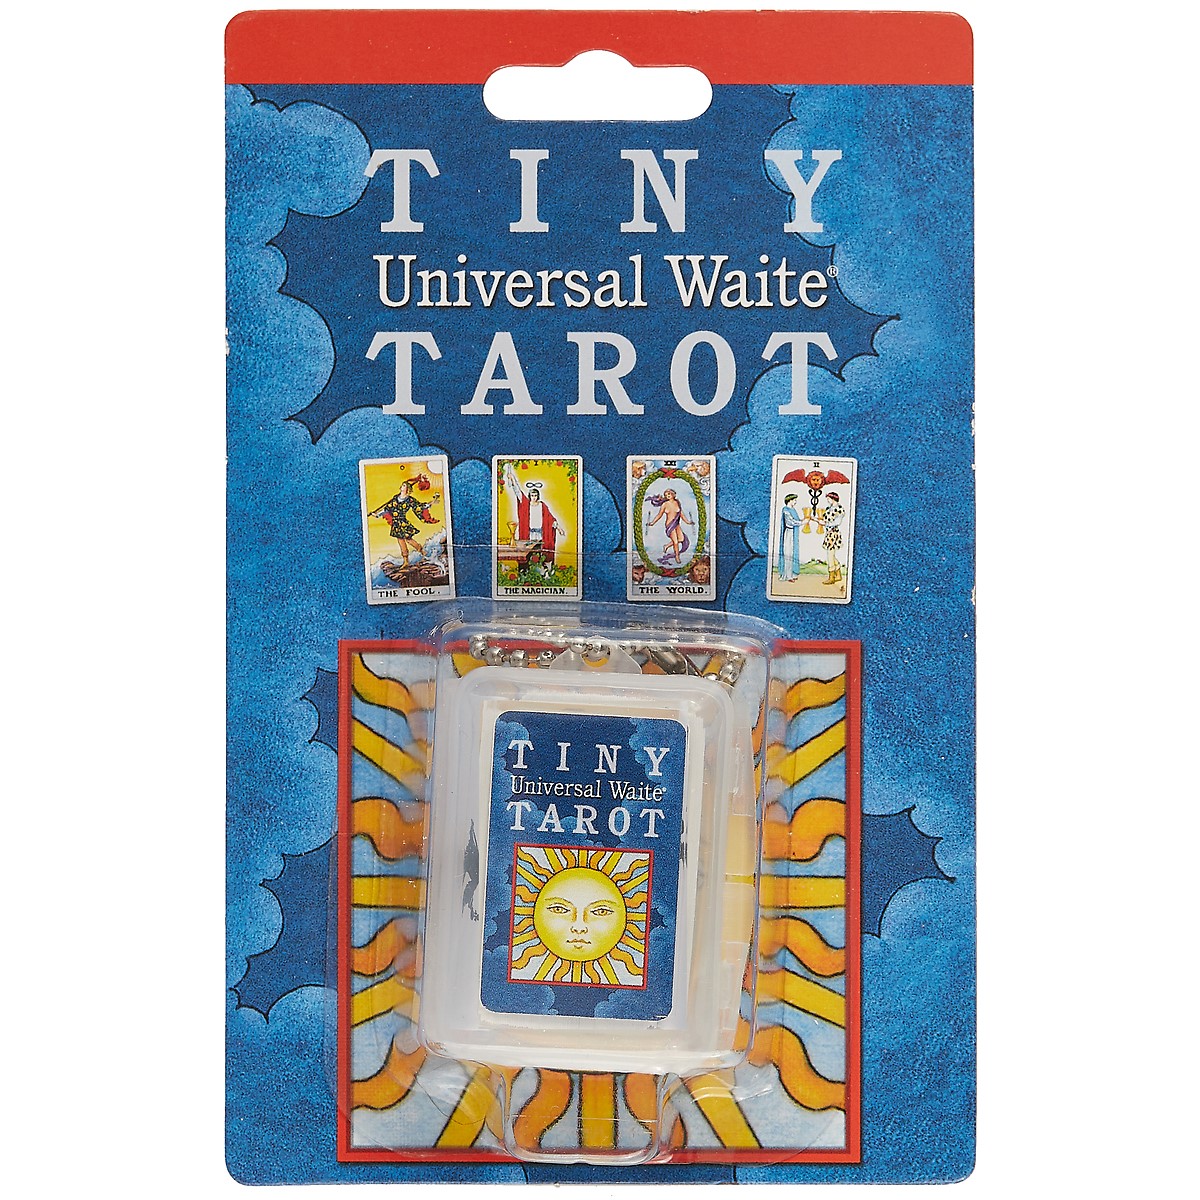 Edward Waite A. Таро Аввалон, Universal Waite Tarot Key Chain Универсальное Таро Уэйта брелок для ключей (карты+инструкция на англ